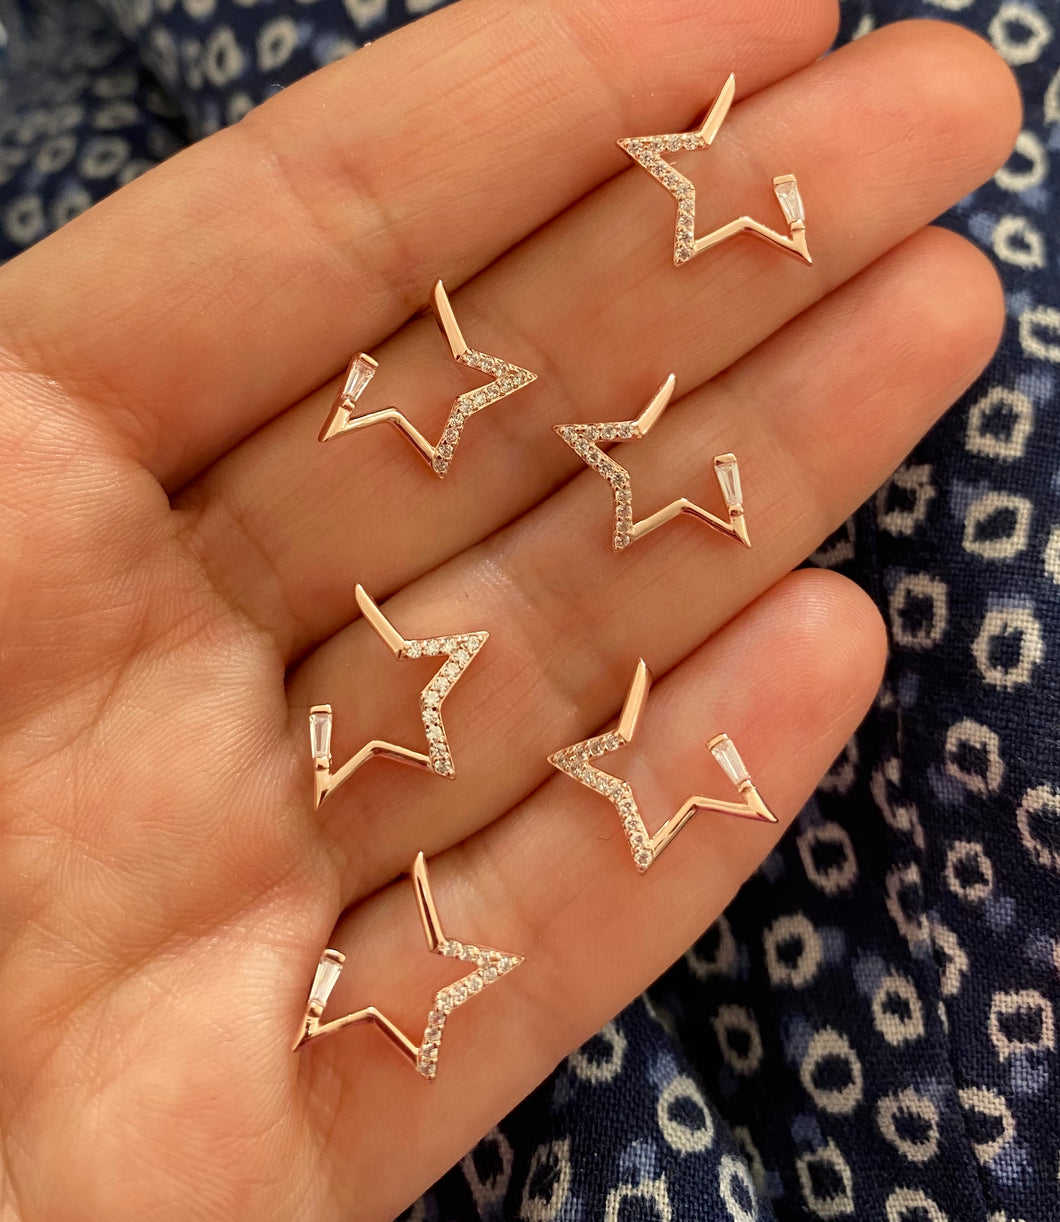 Star shaped stud with zircon stones